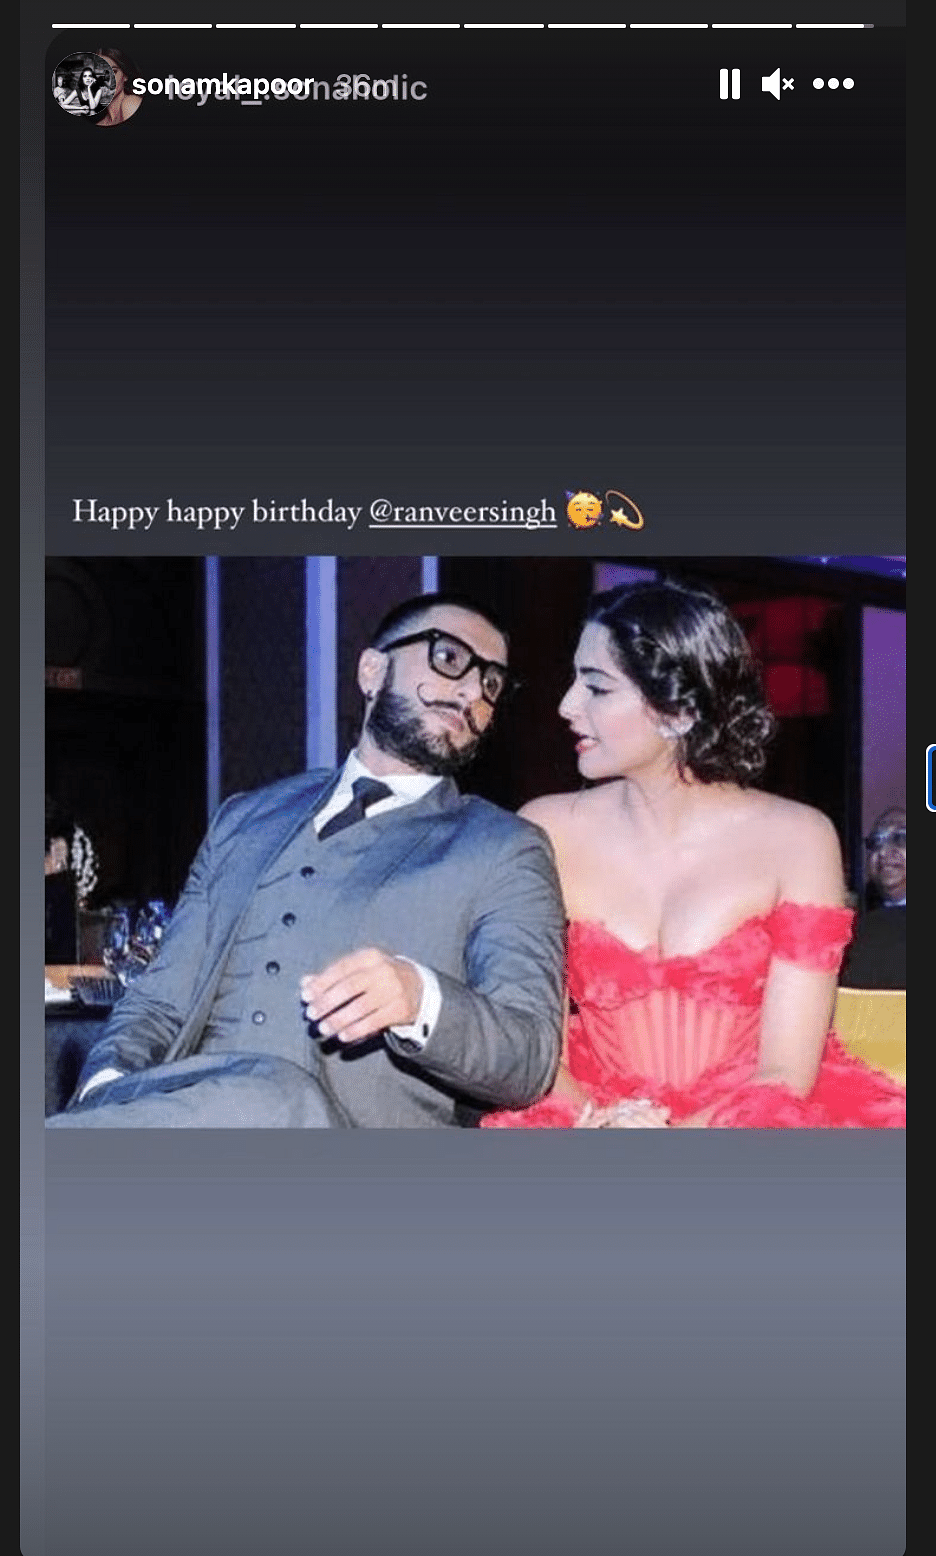 "Happy Birthday My Most Favourite Person", Deepika Padukone wishes Ranveer Singh on his birthday.